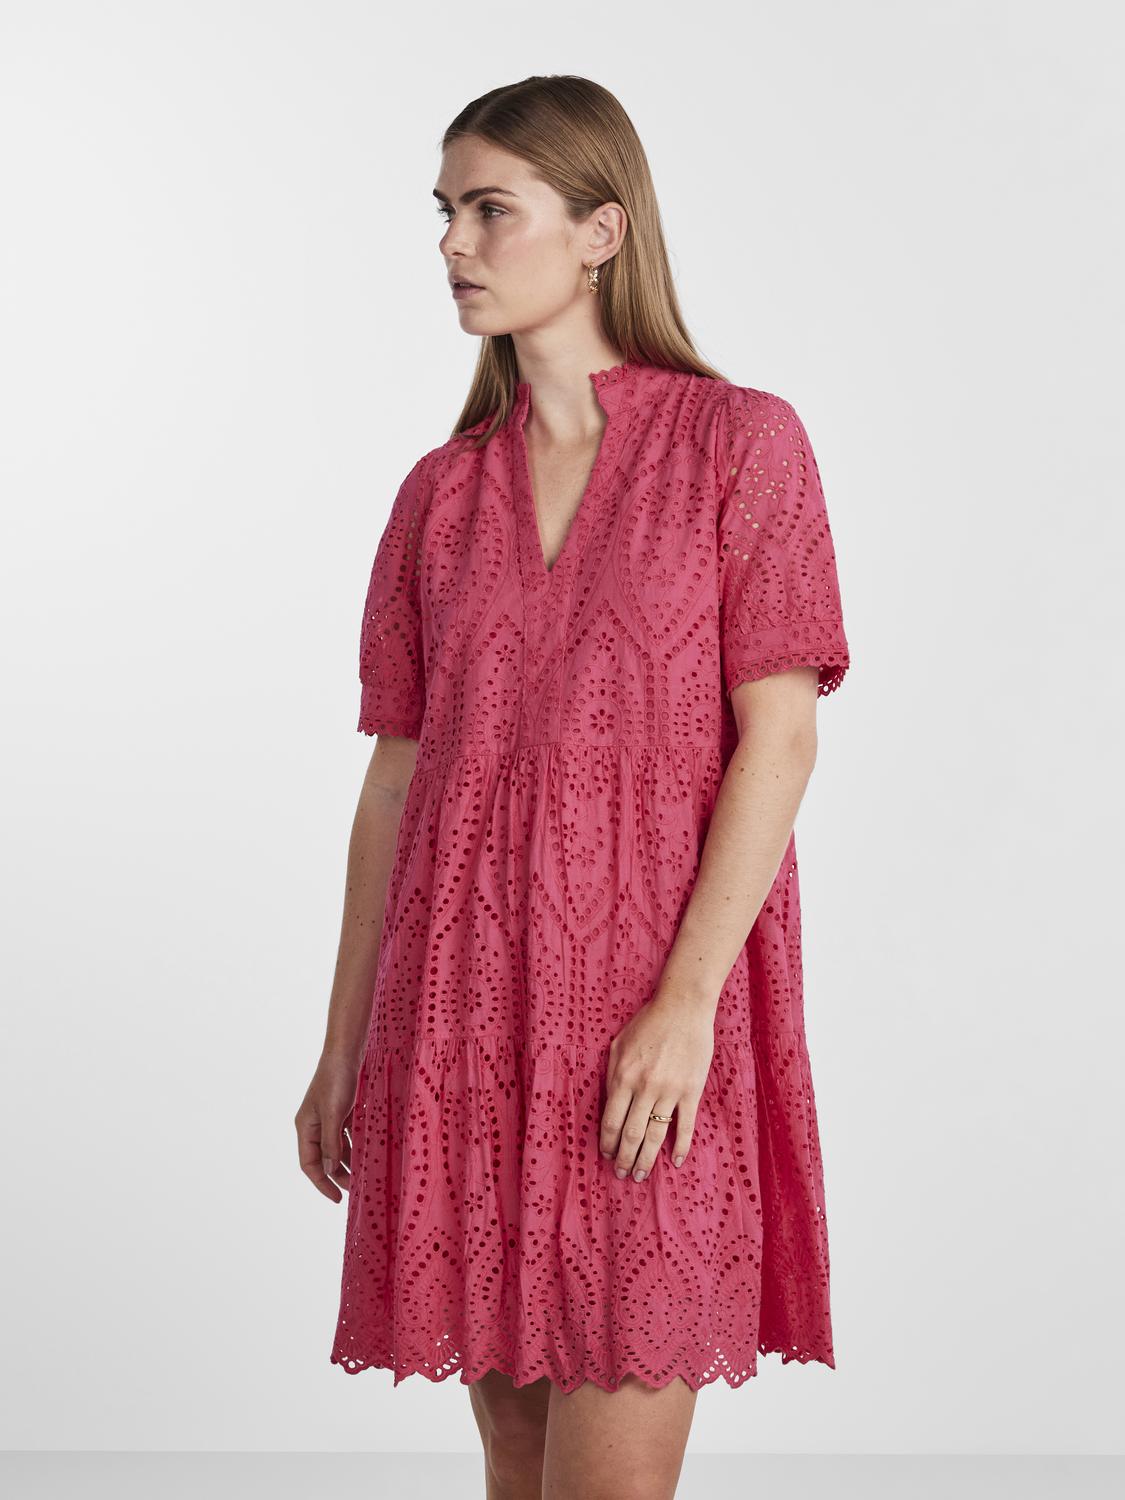 YASHOLI Dress - Raspberry Sorbet